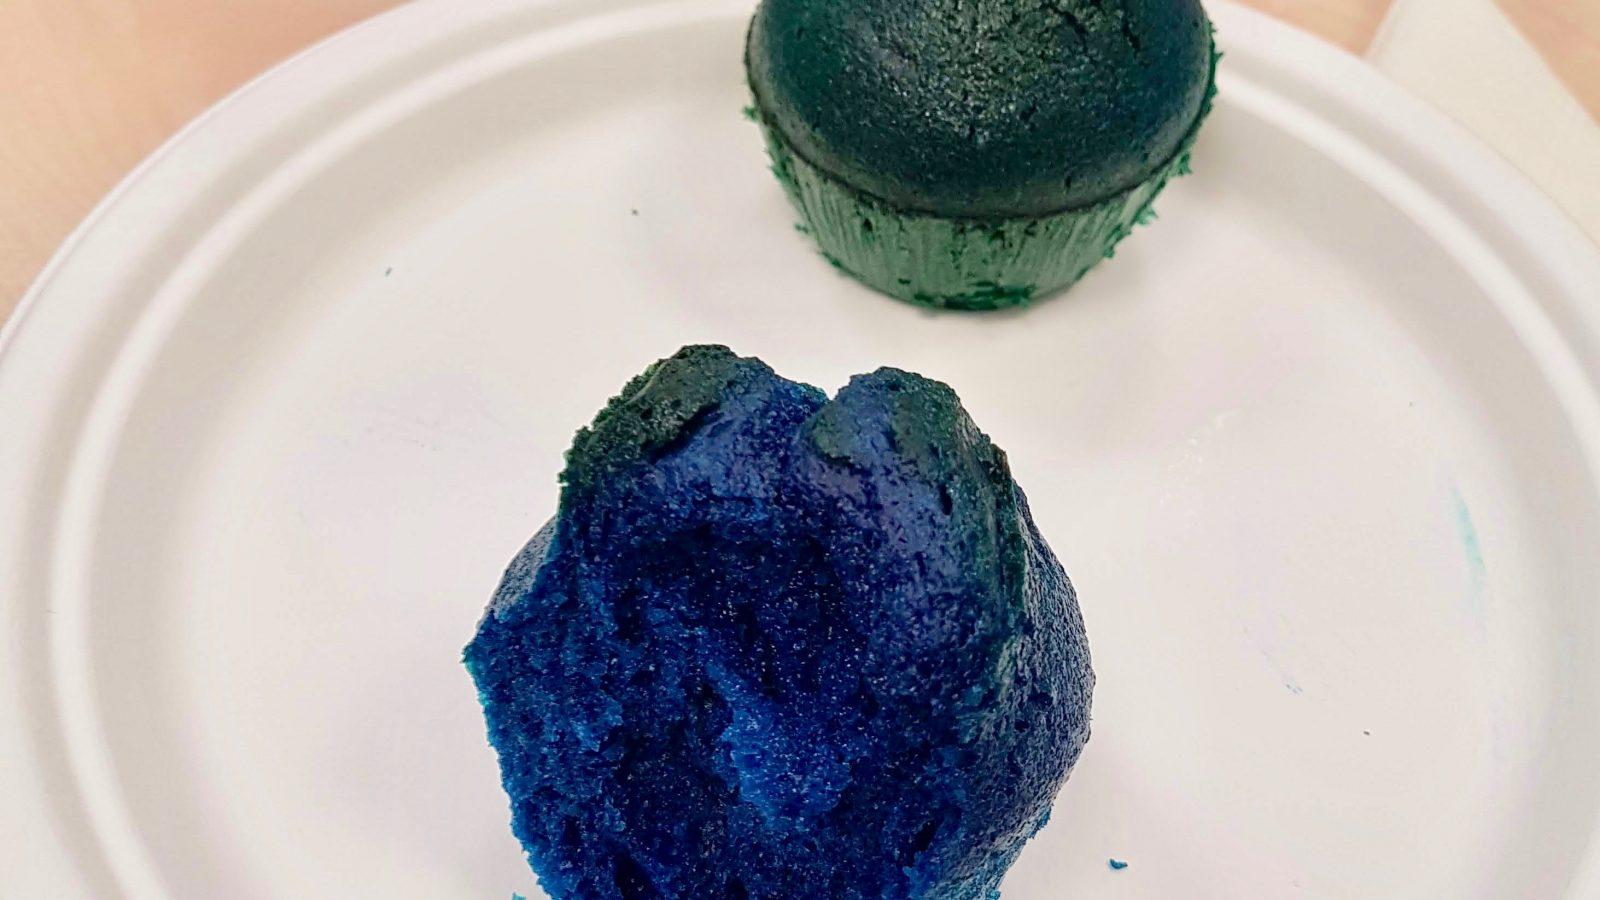 blue muffins